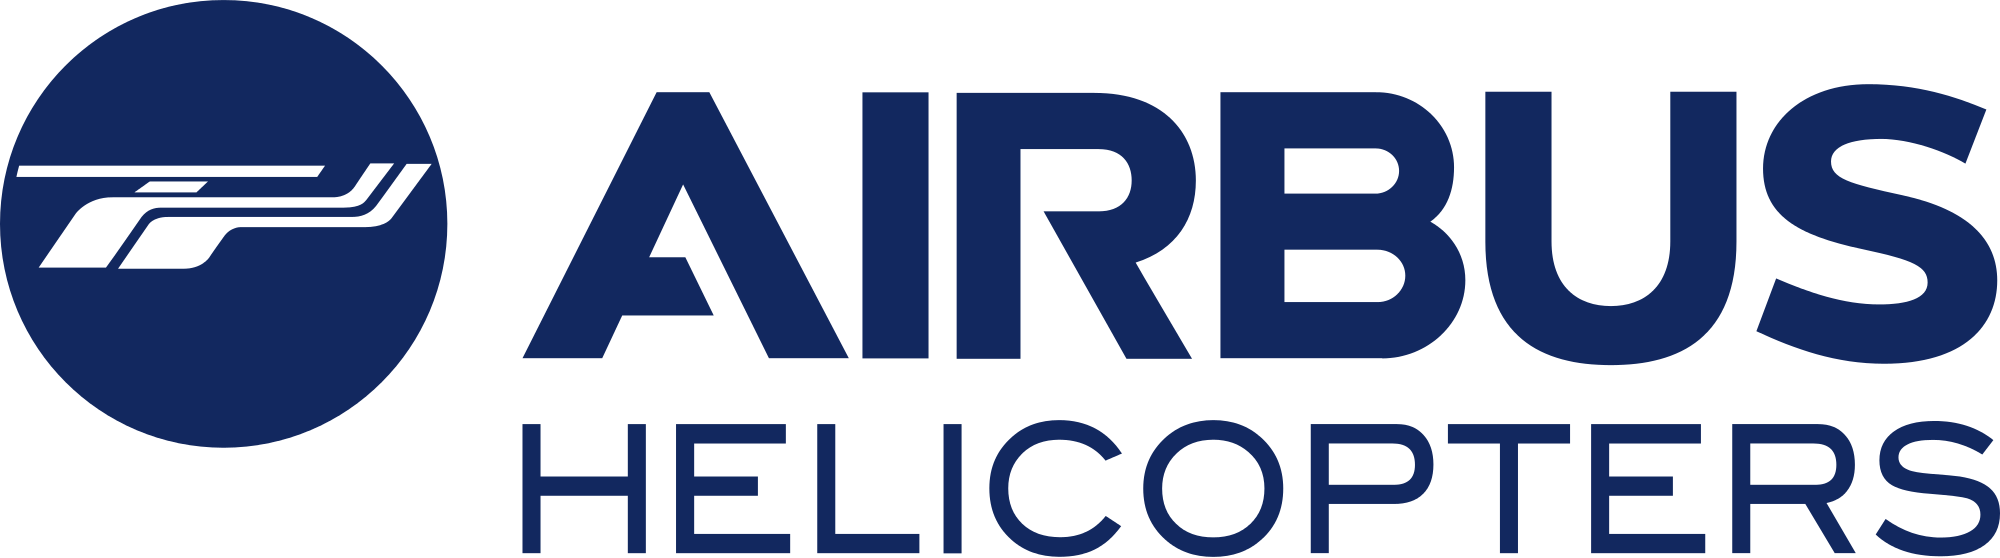 Airbus Logo Vector